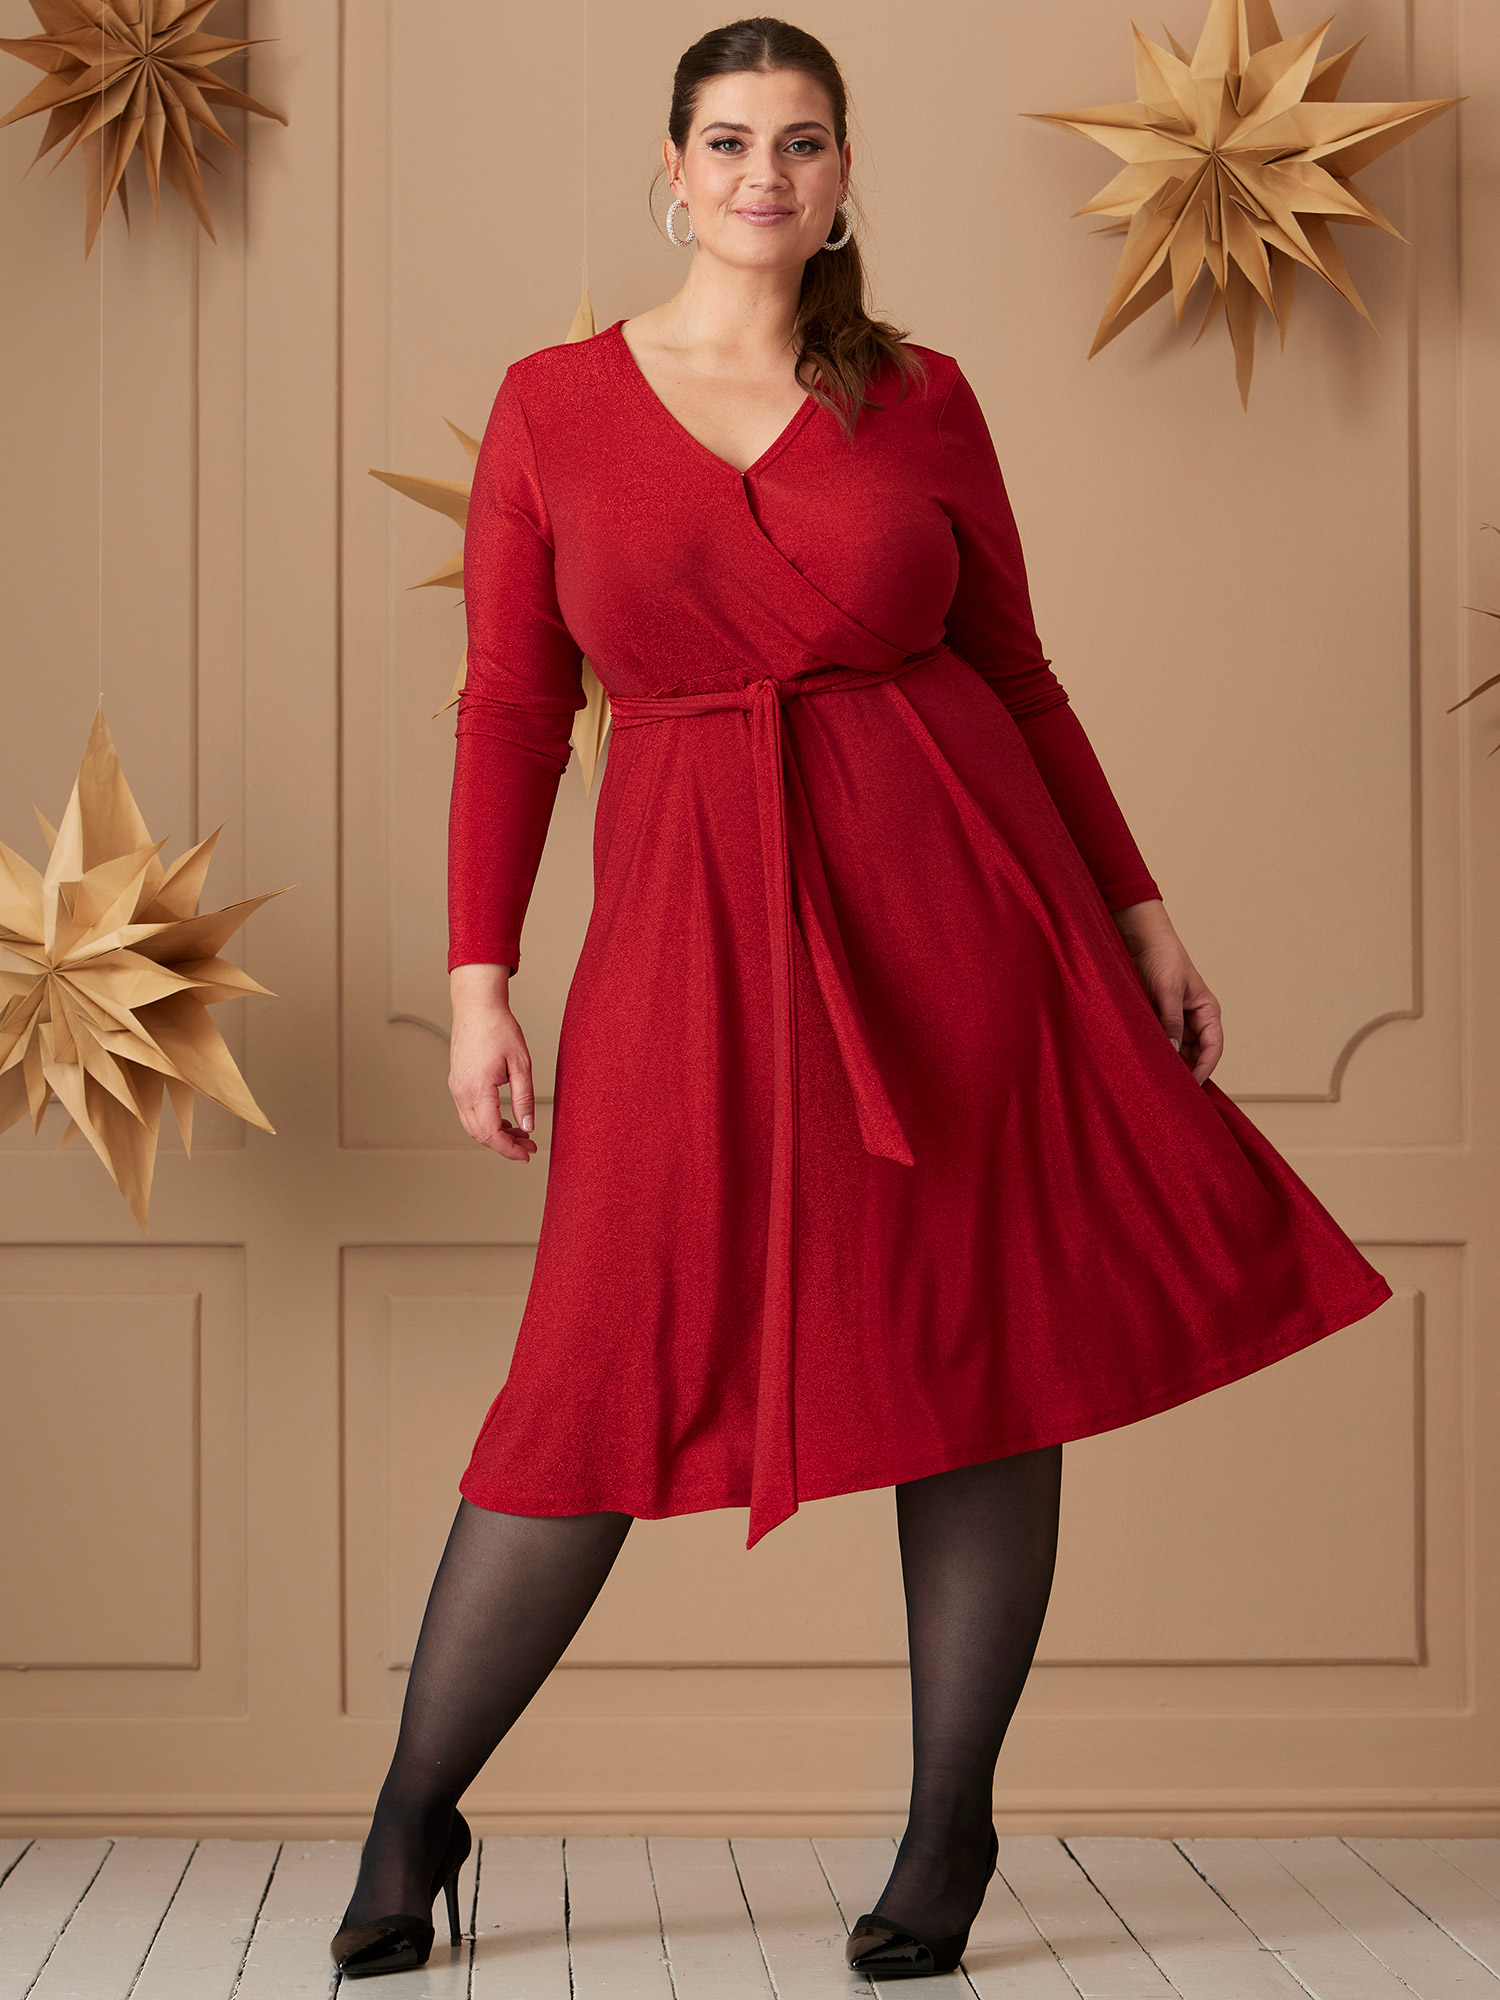 JAYLEE - Rød glimmer kjole fra Zhenzi